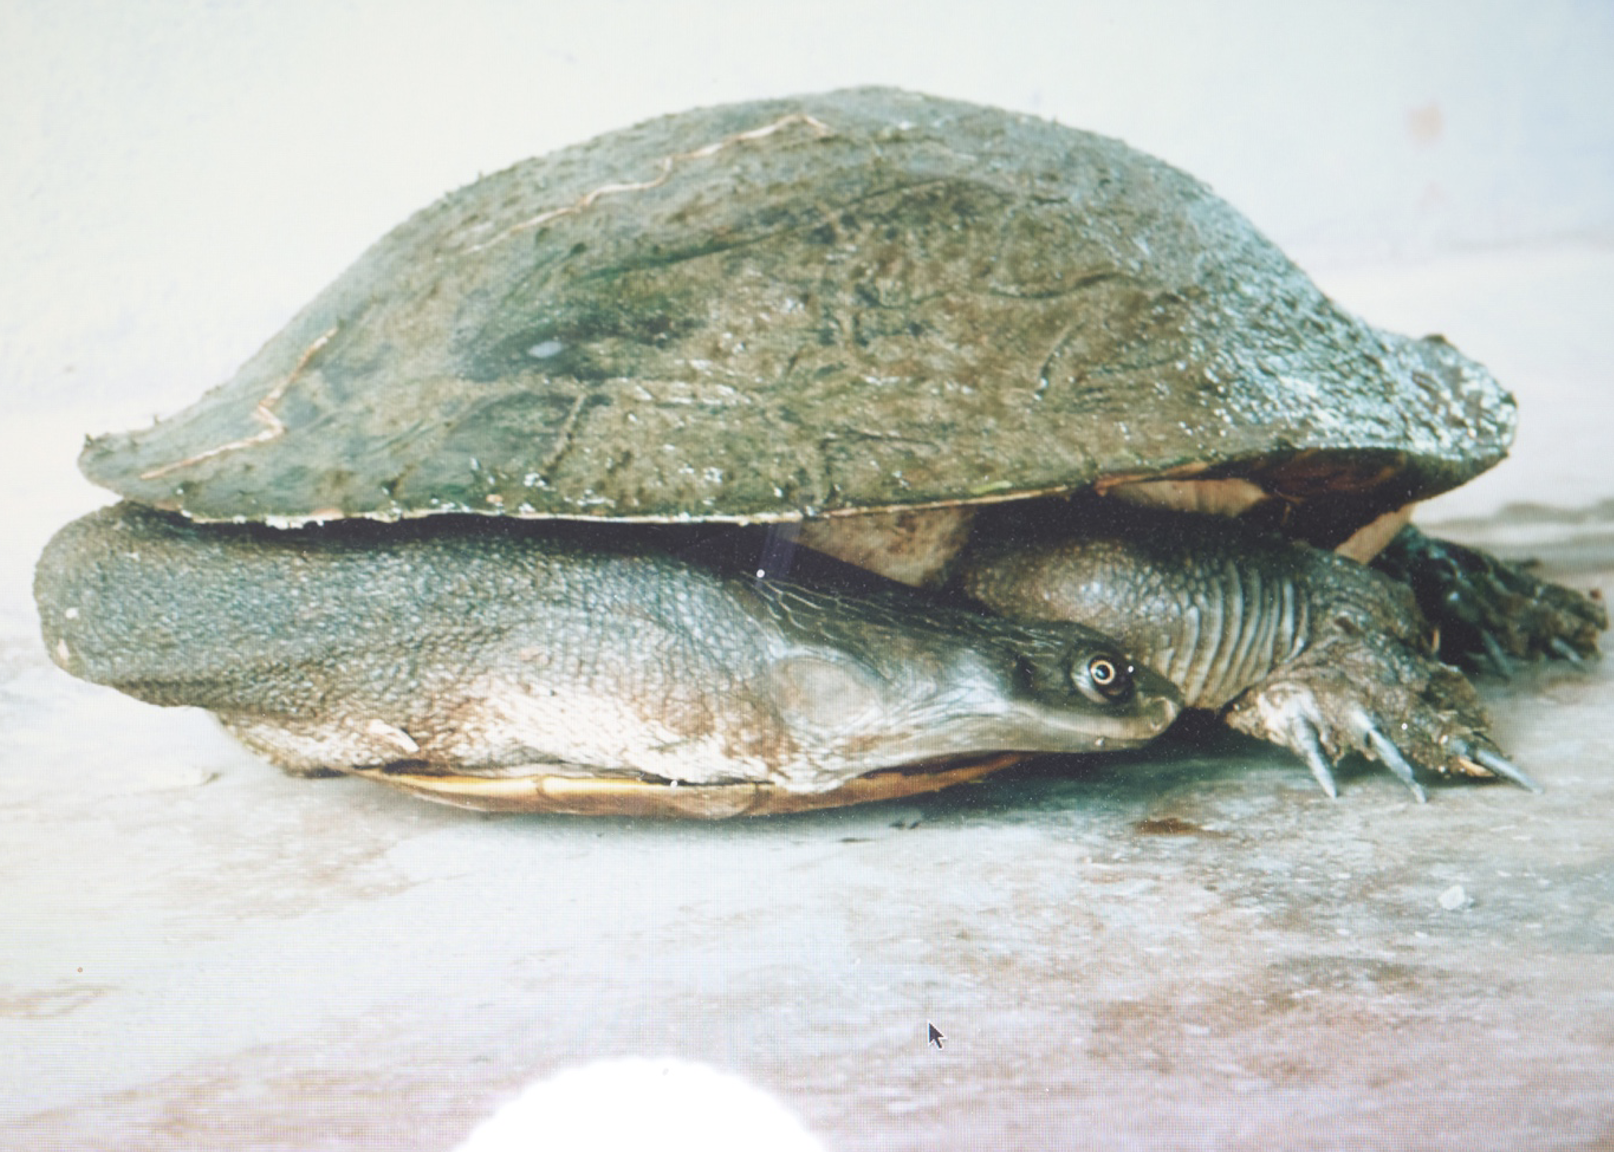 Broad Shelled River Turtle Photo: Ed Frazer